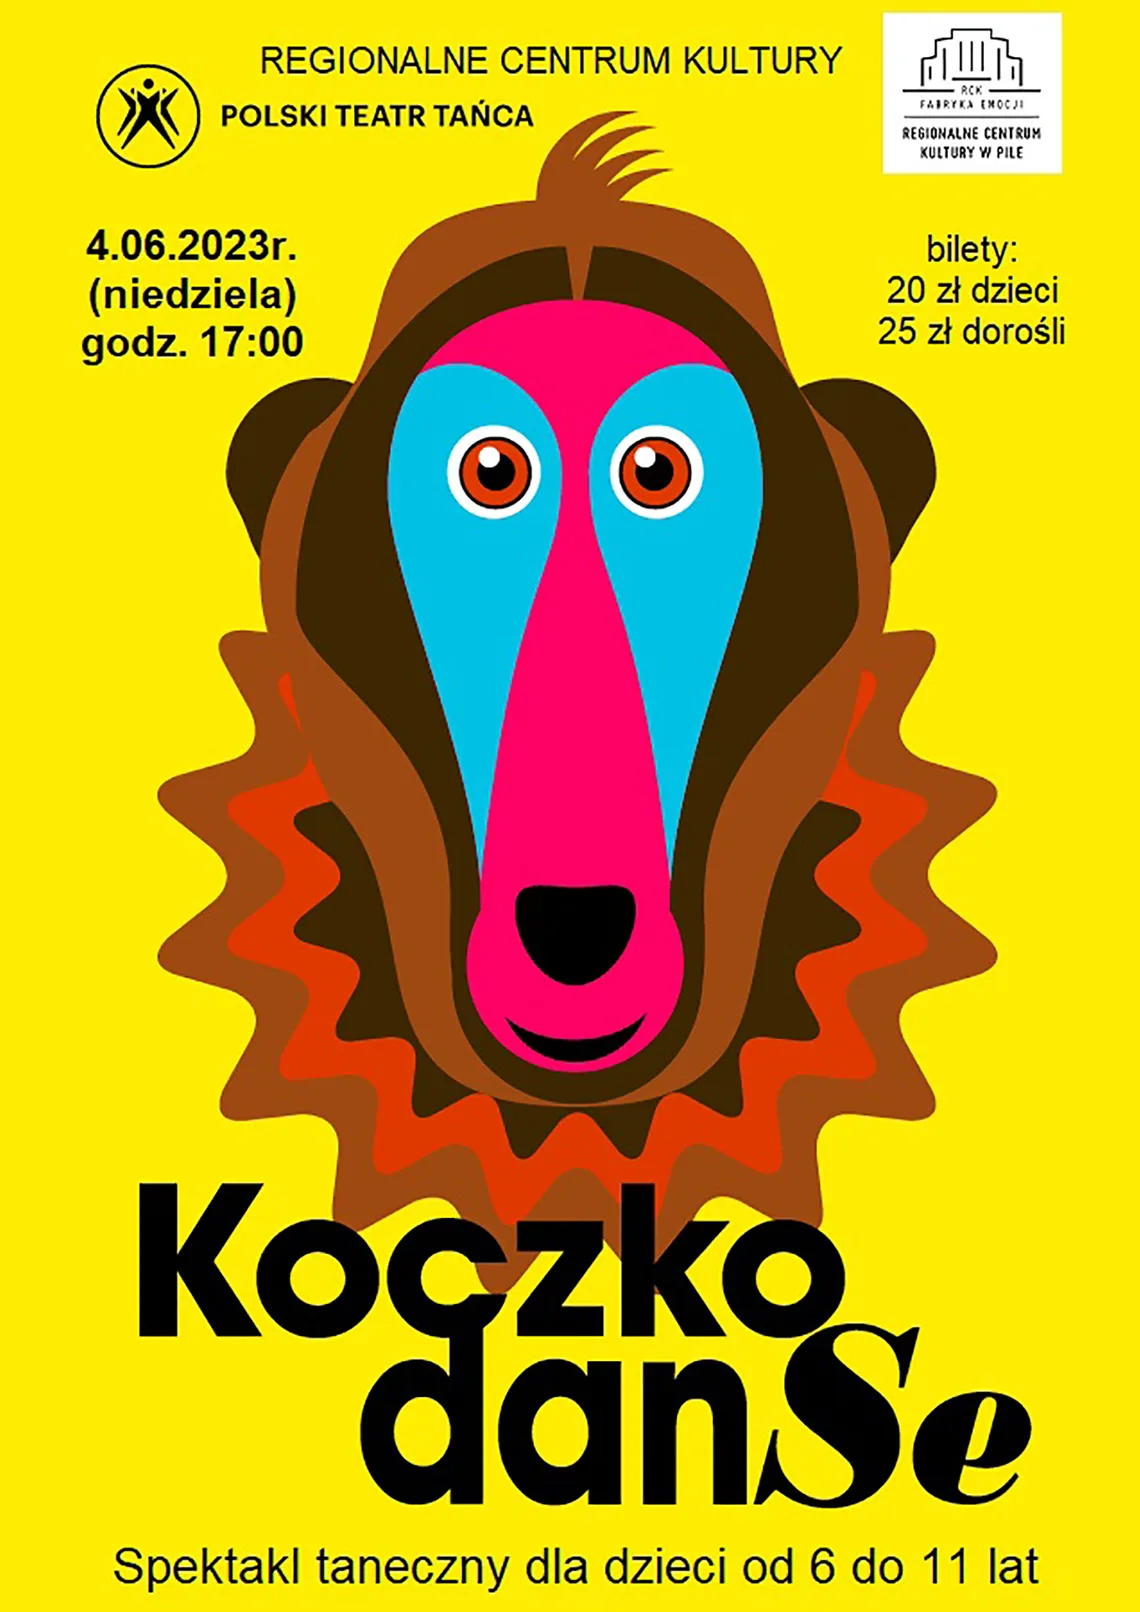 Polski Teatr Tańca<br />KoczkodanSE